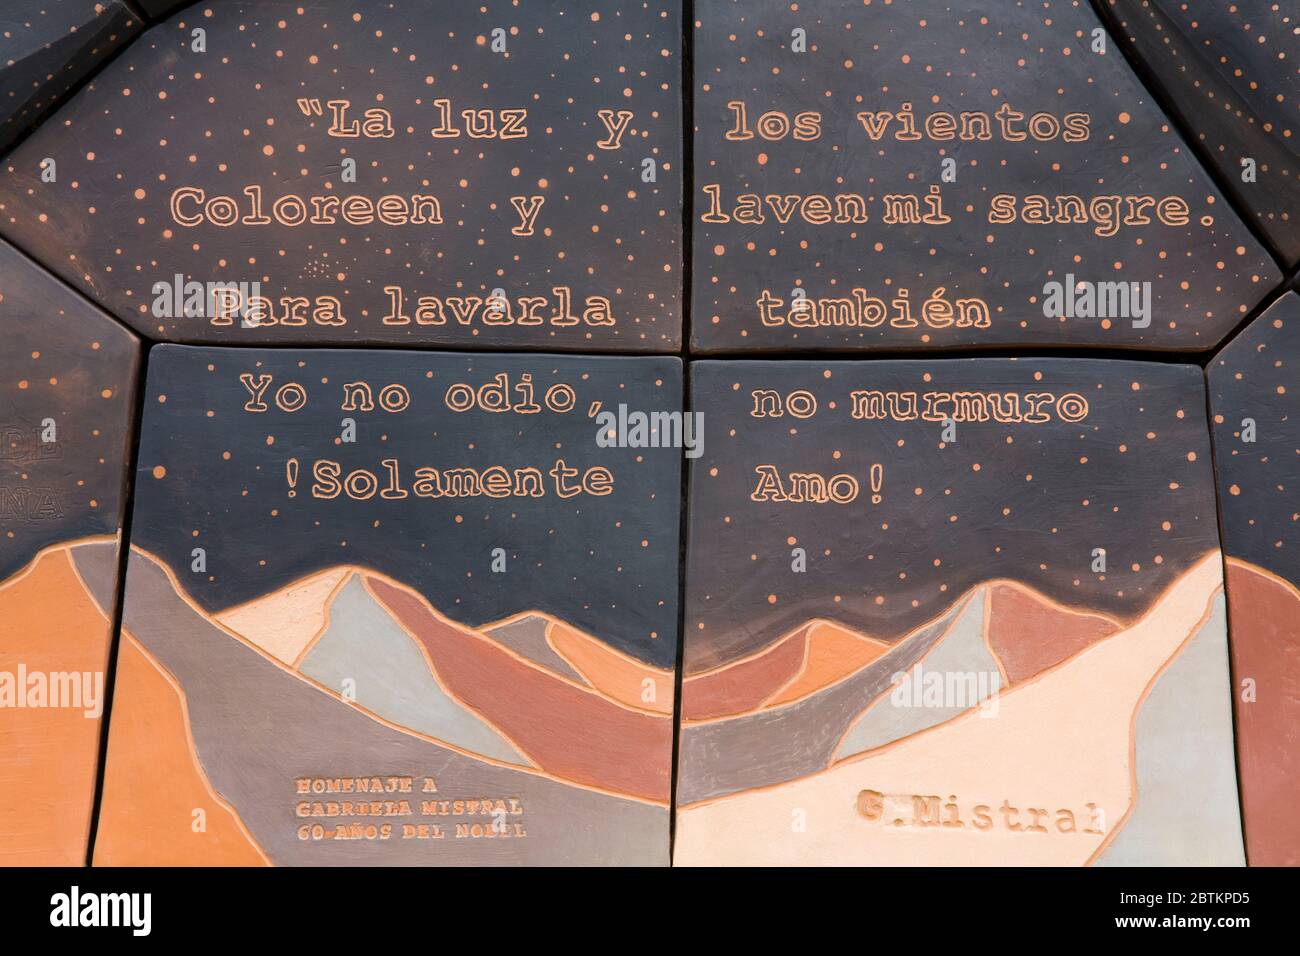 Verses by Gabriela Mistral on plaque in Pinera House, University of La Serena, Colonial City of La Serena,Norte Chico Region, Chile, South America Stock Photo